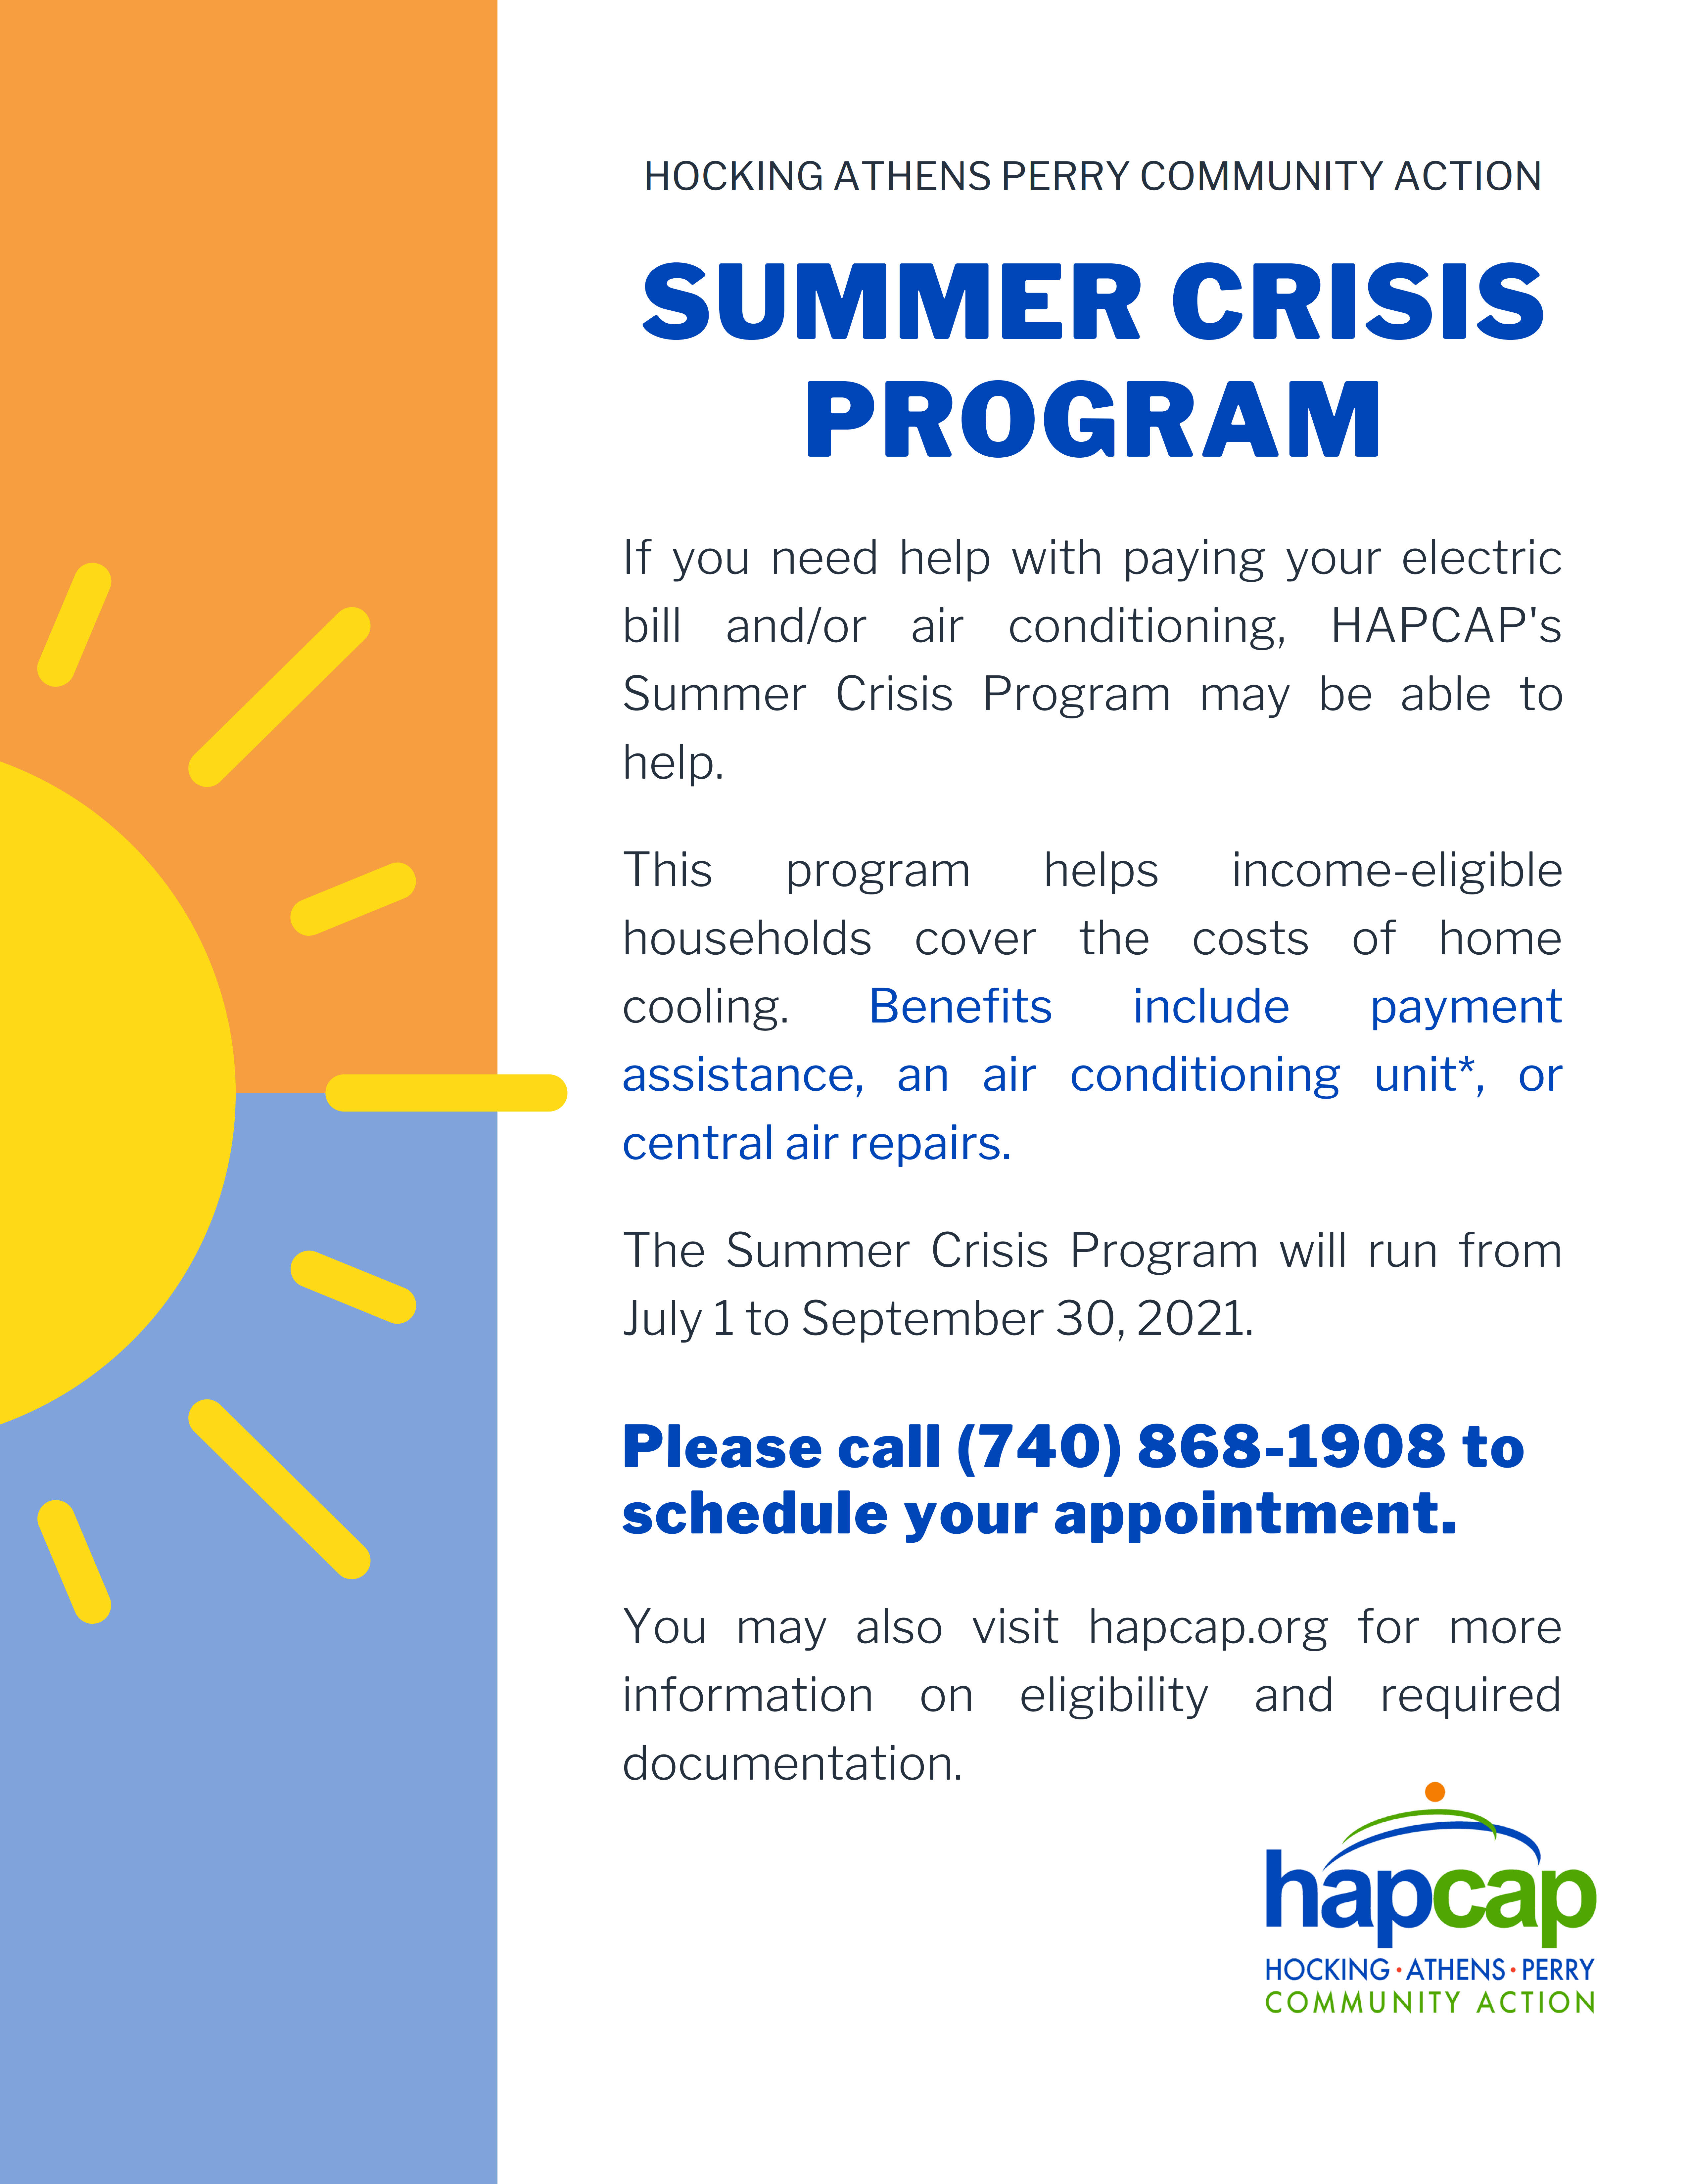 HAPCAP’s Summer Crisis Program beginning July 1, 2021 — Perry County Ohio